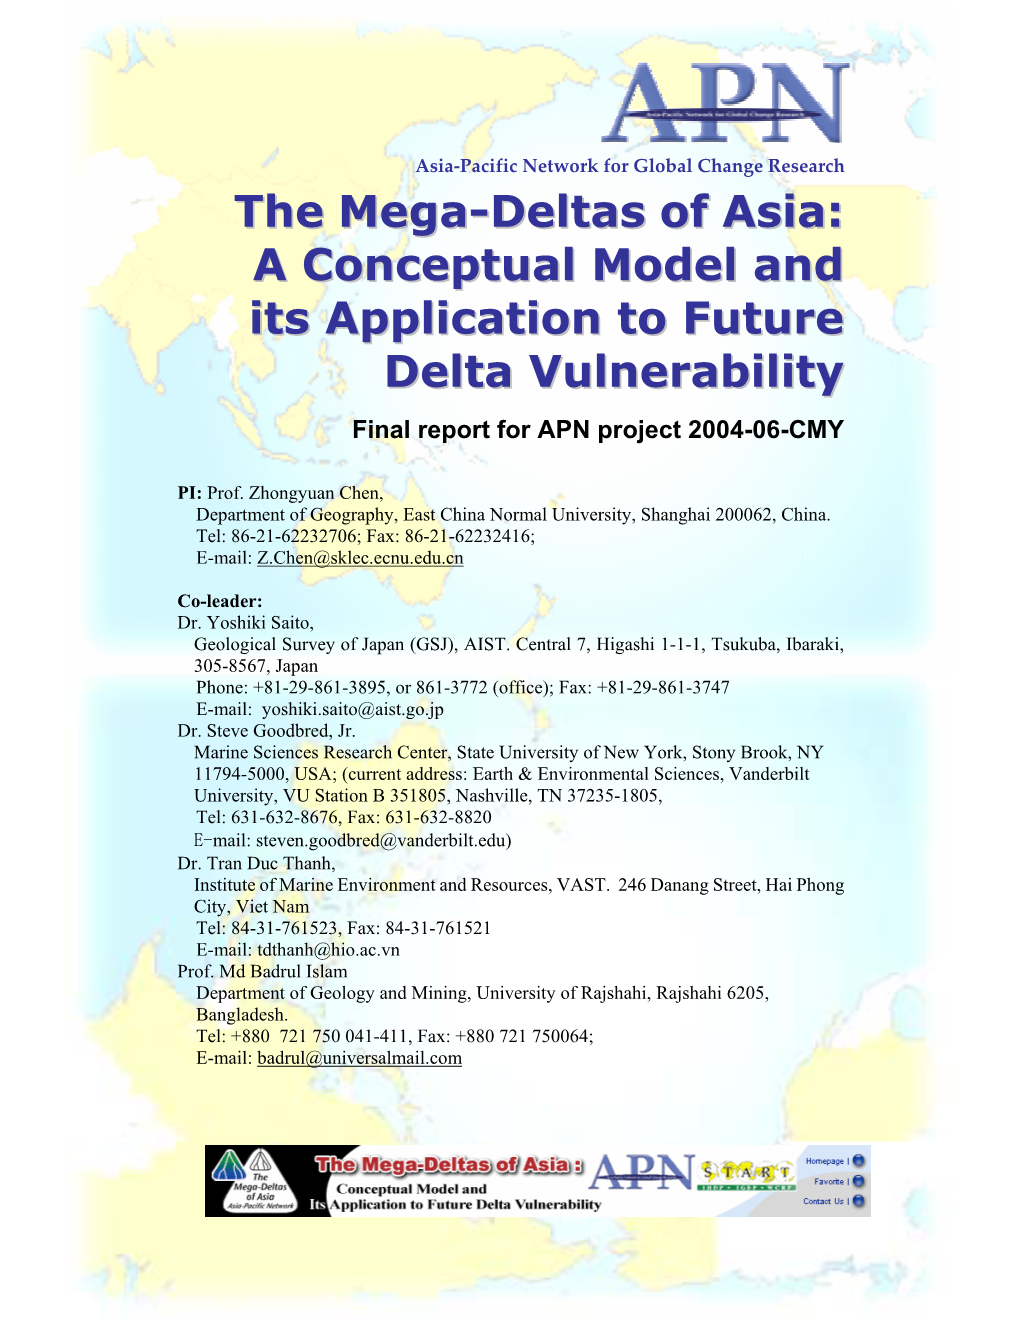 The Mega-Deltas of Asia: a Conceptual Model and Its Application to Future Delta Vulnerability